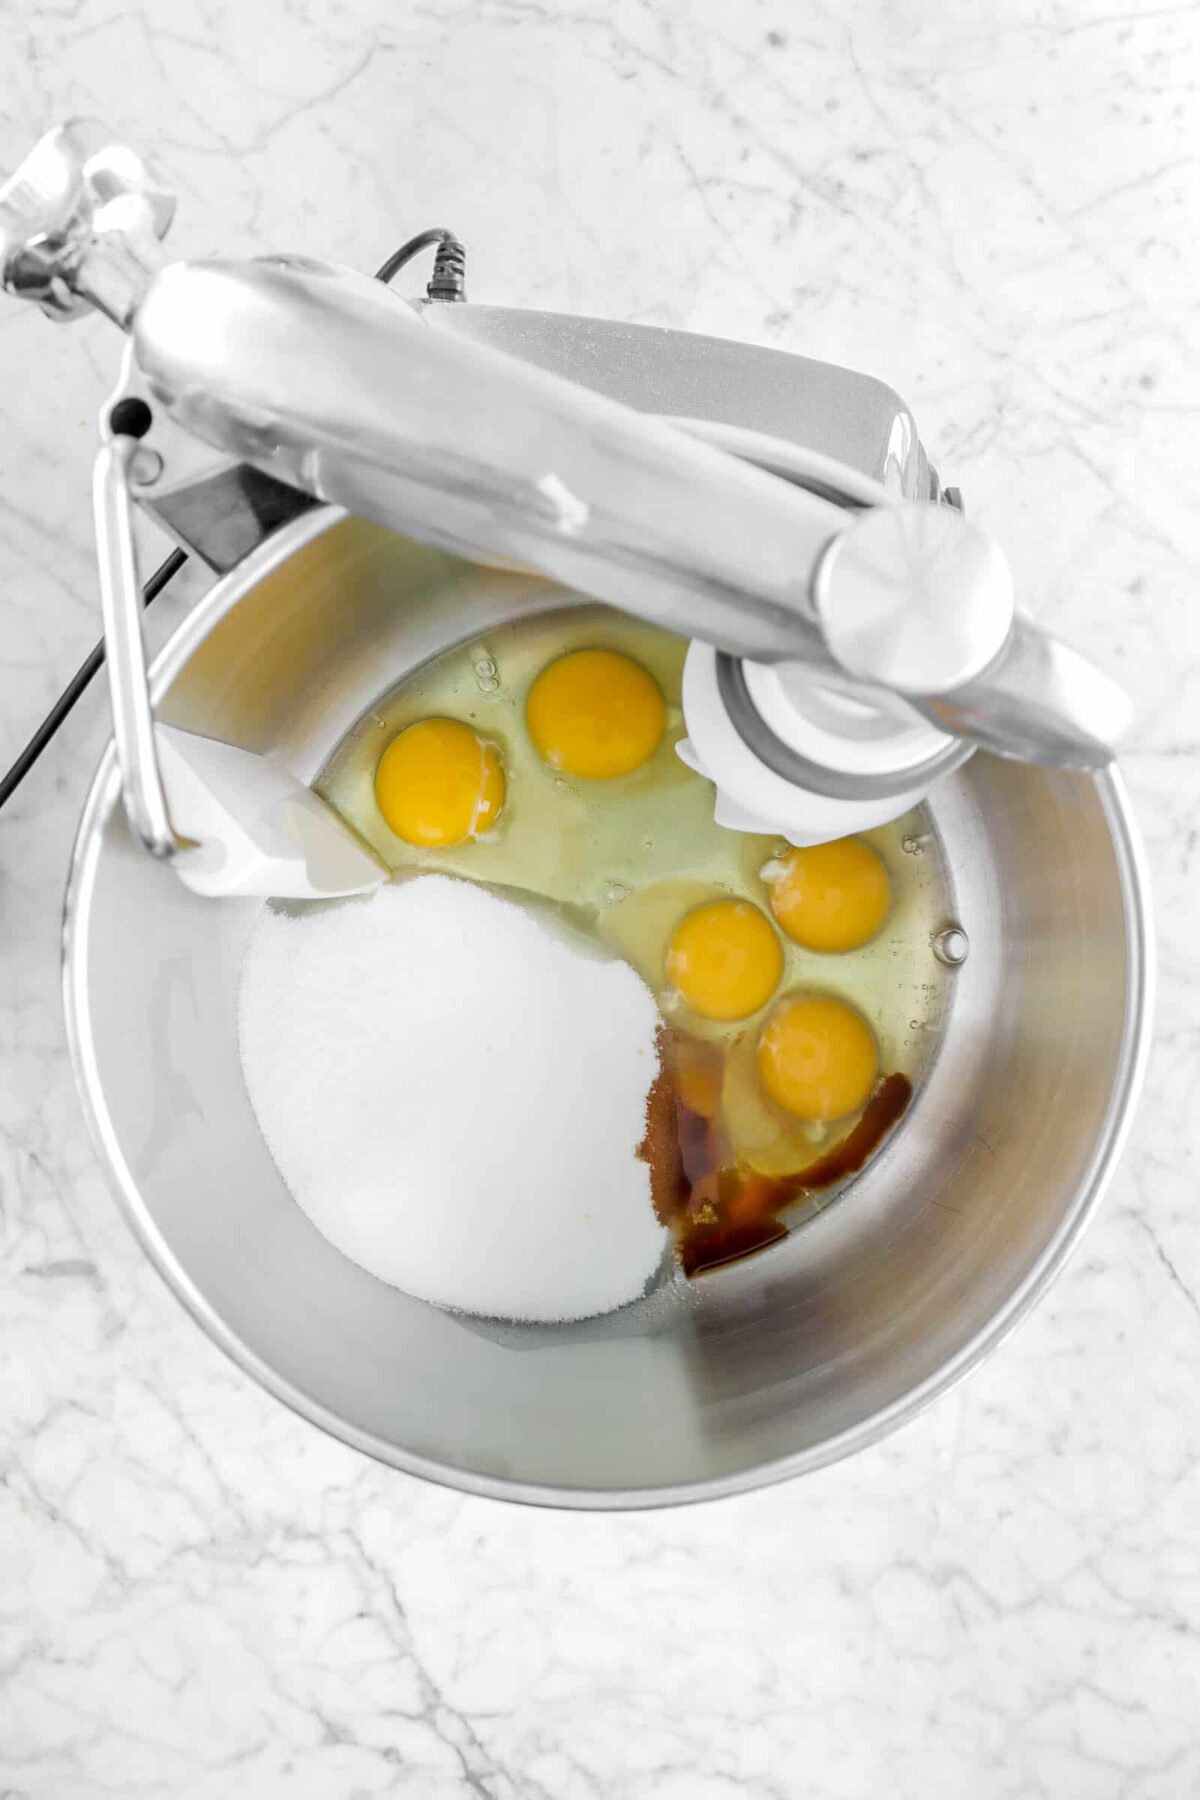 eggs, sugar, and vanilla in mixer bowl